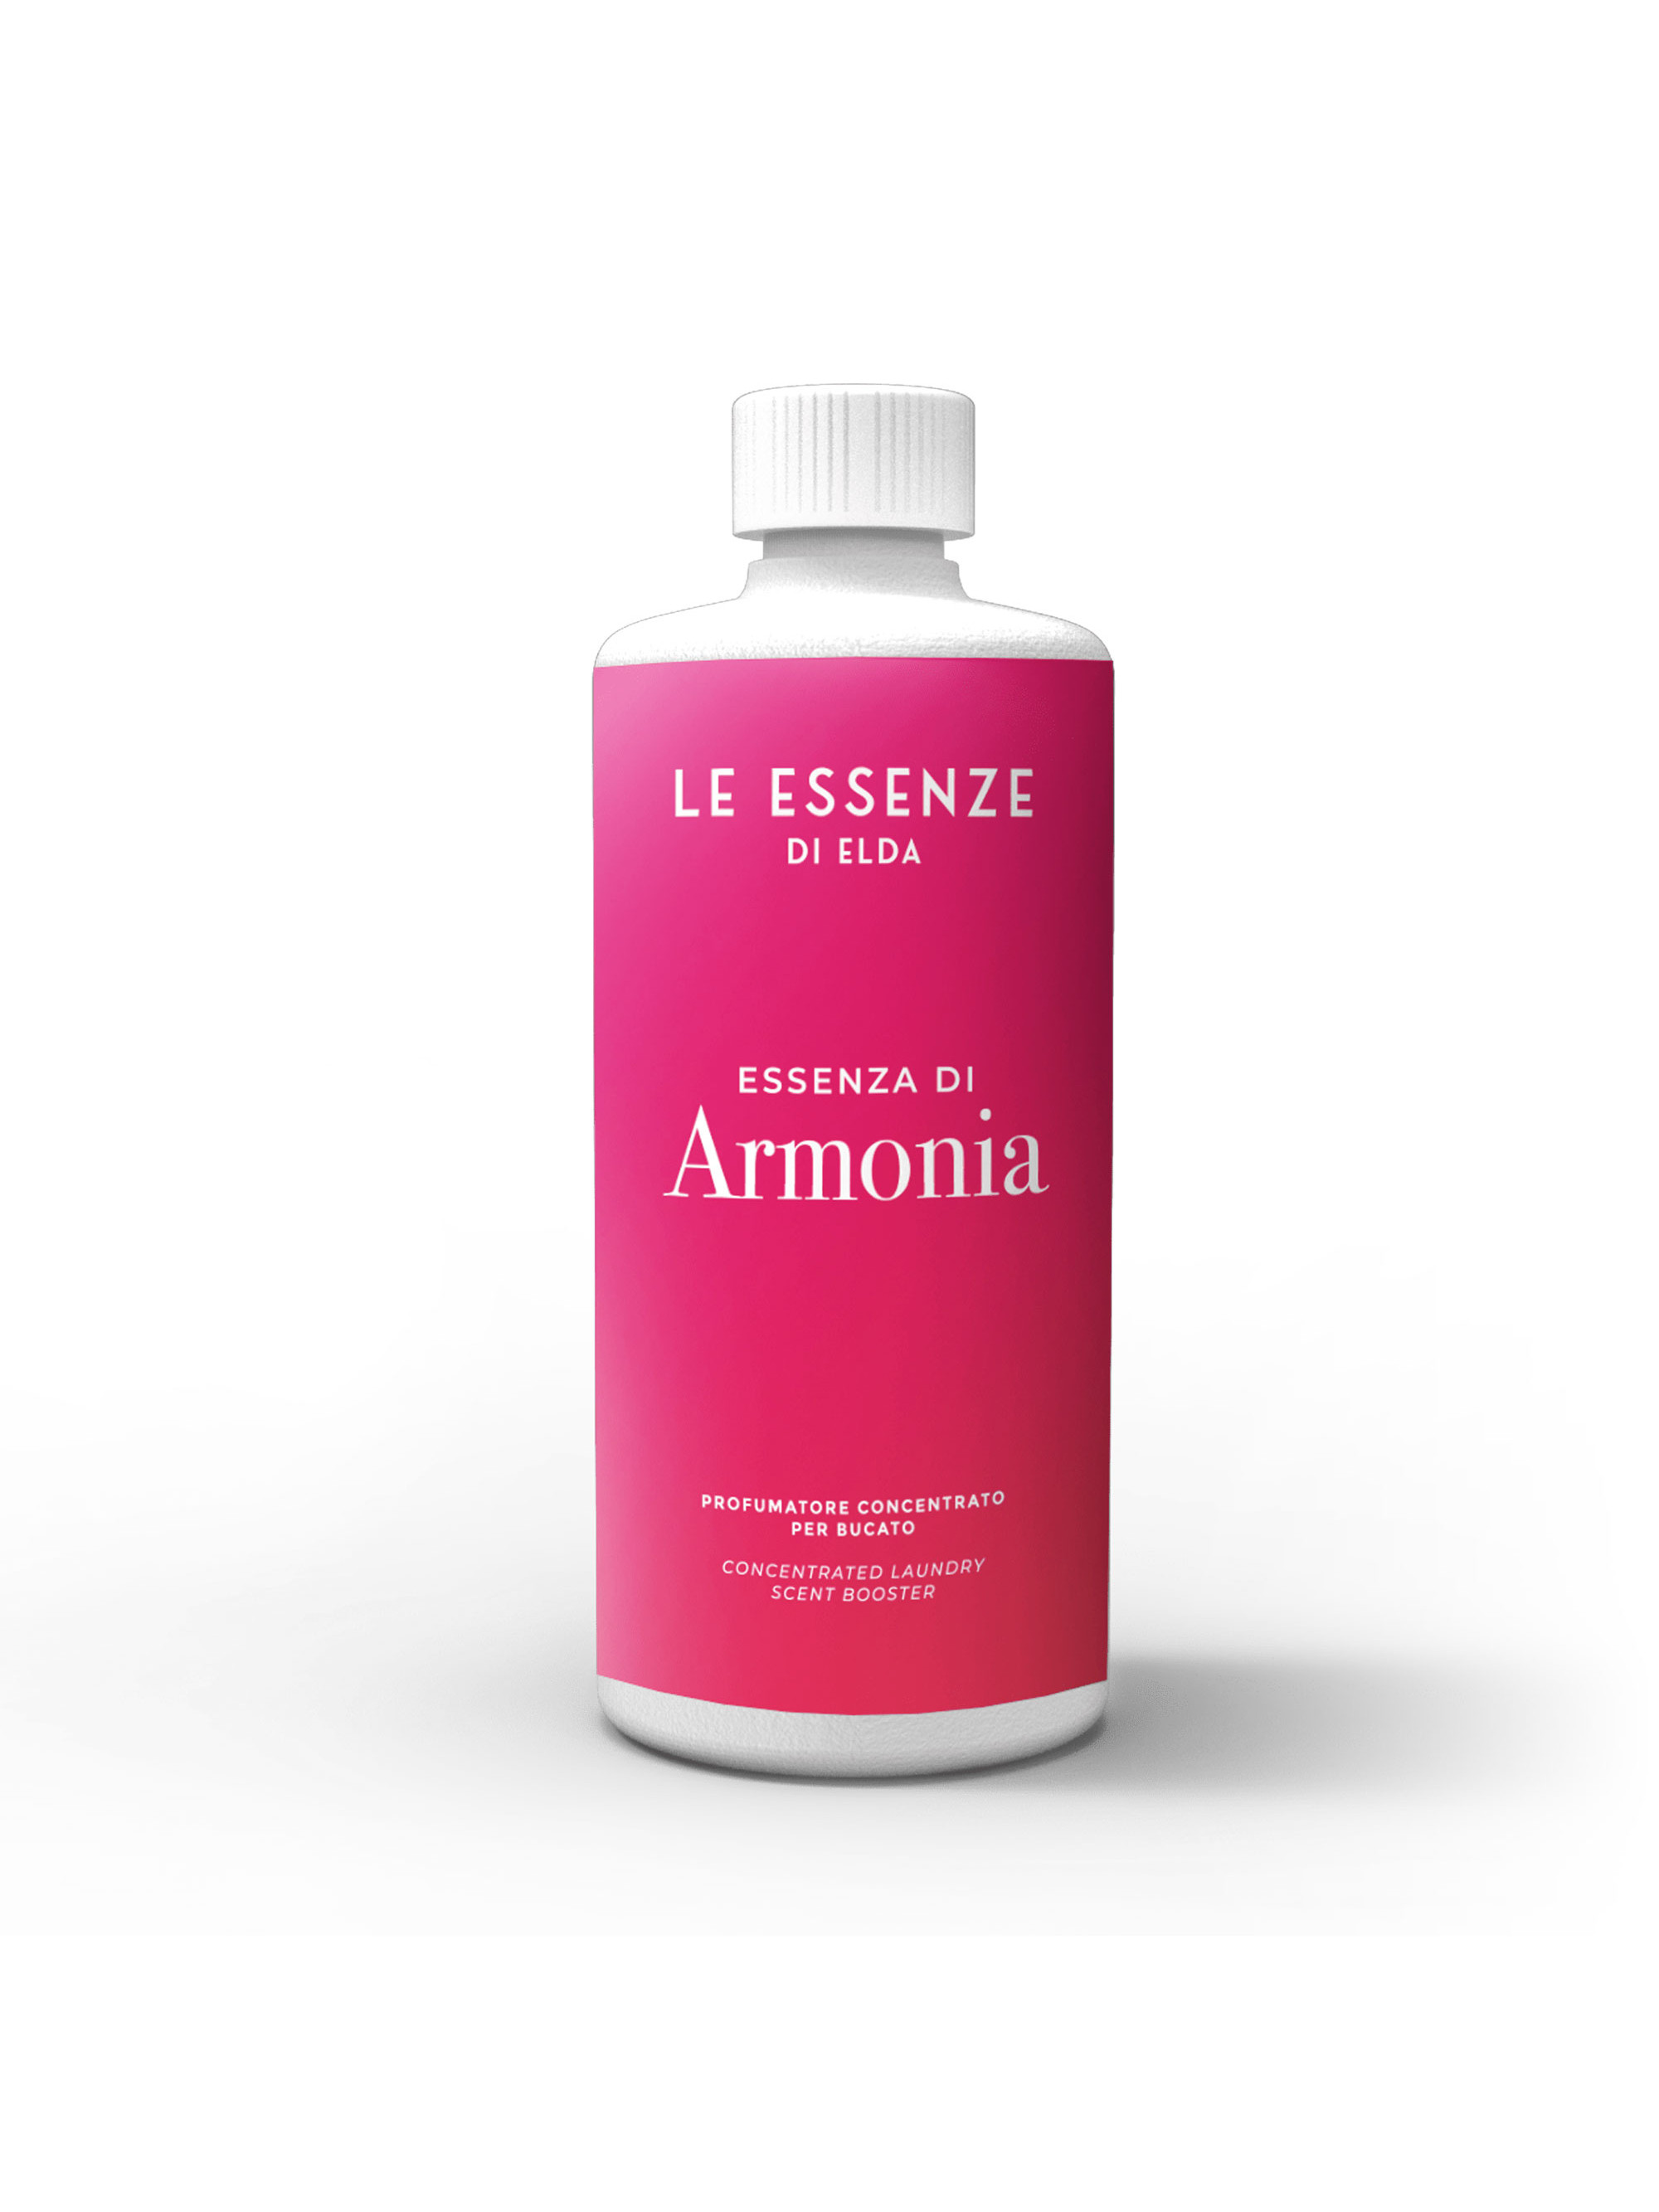 Essenza Armonia Aromatherapy - parfum de lessive - 500ml